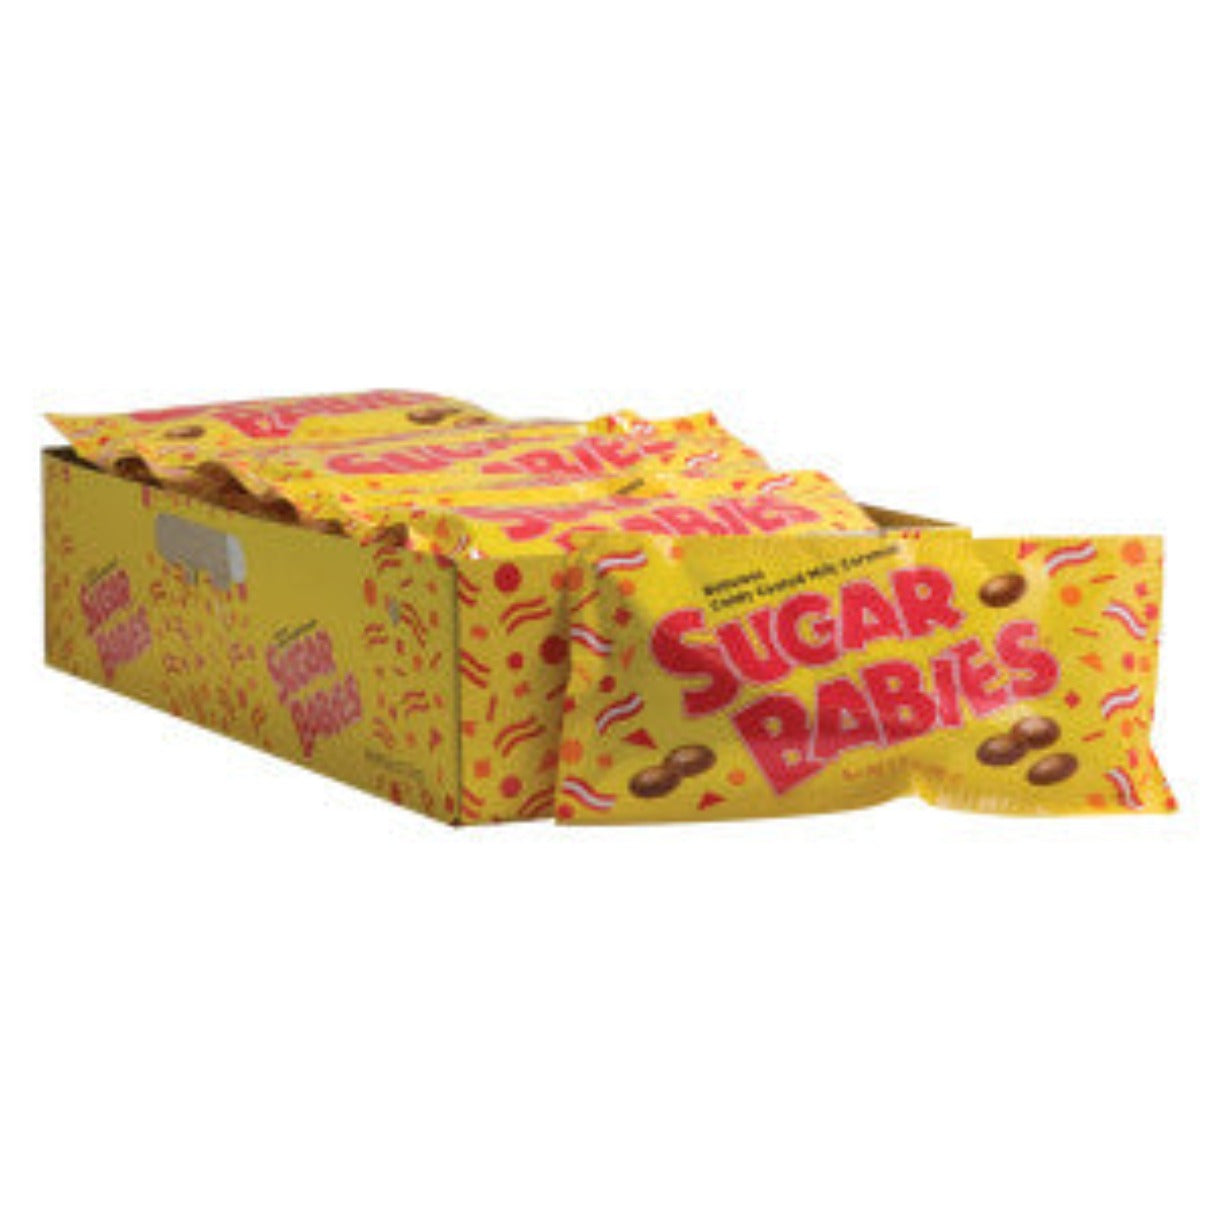 Sugar Babies Nostalgic Candy 1.7oz - 24ct – I Got Your Candy